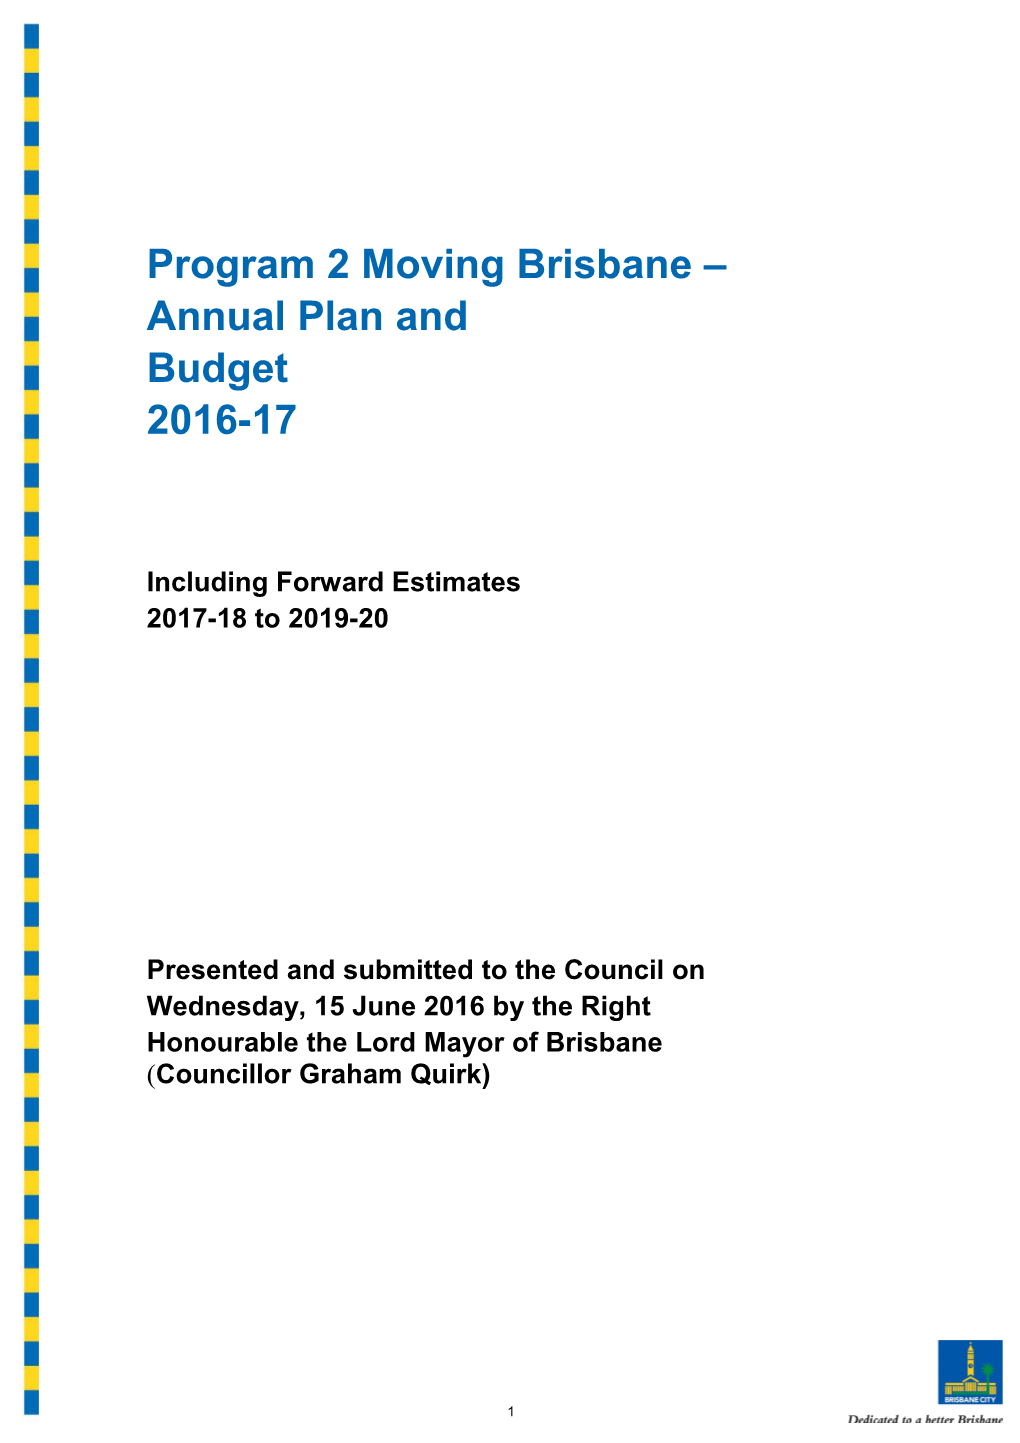 Program 2 Moving Brisbane